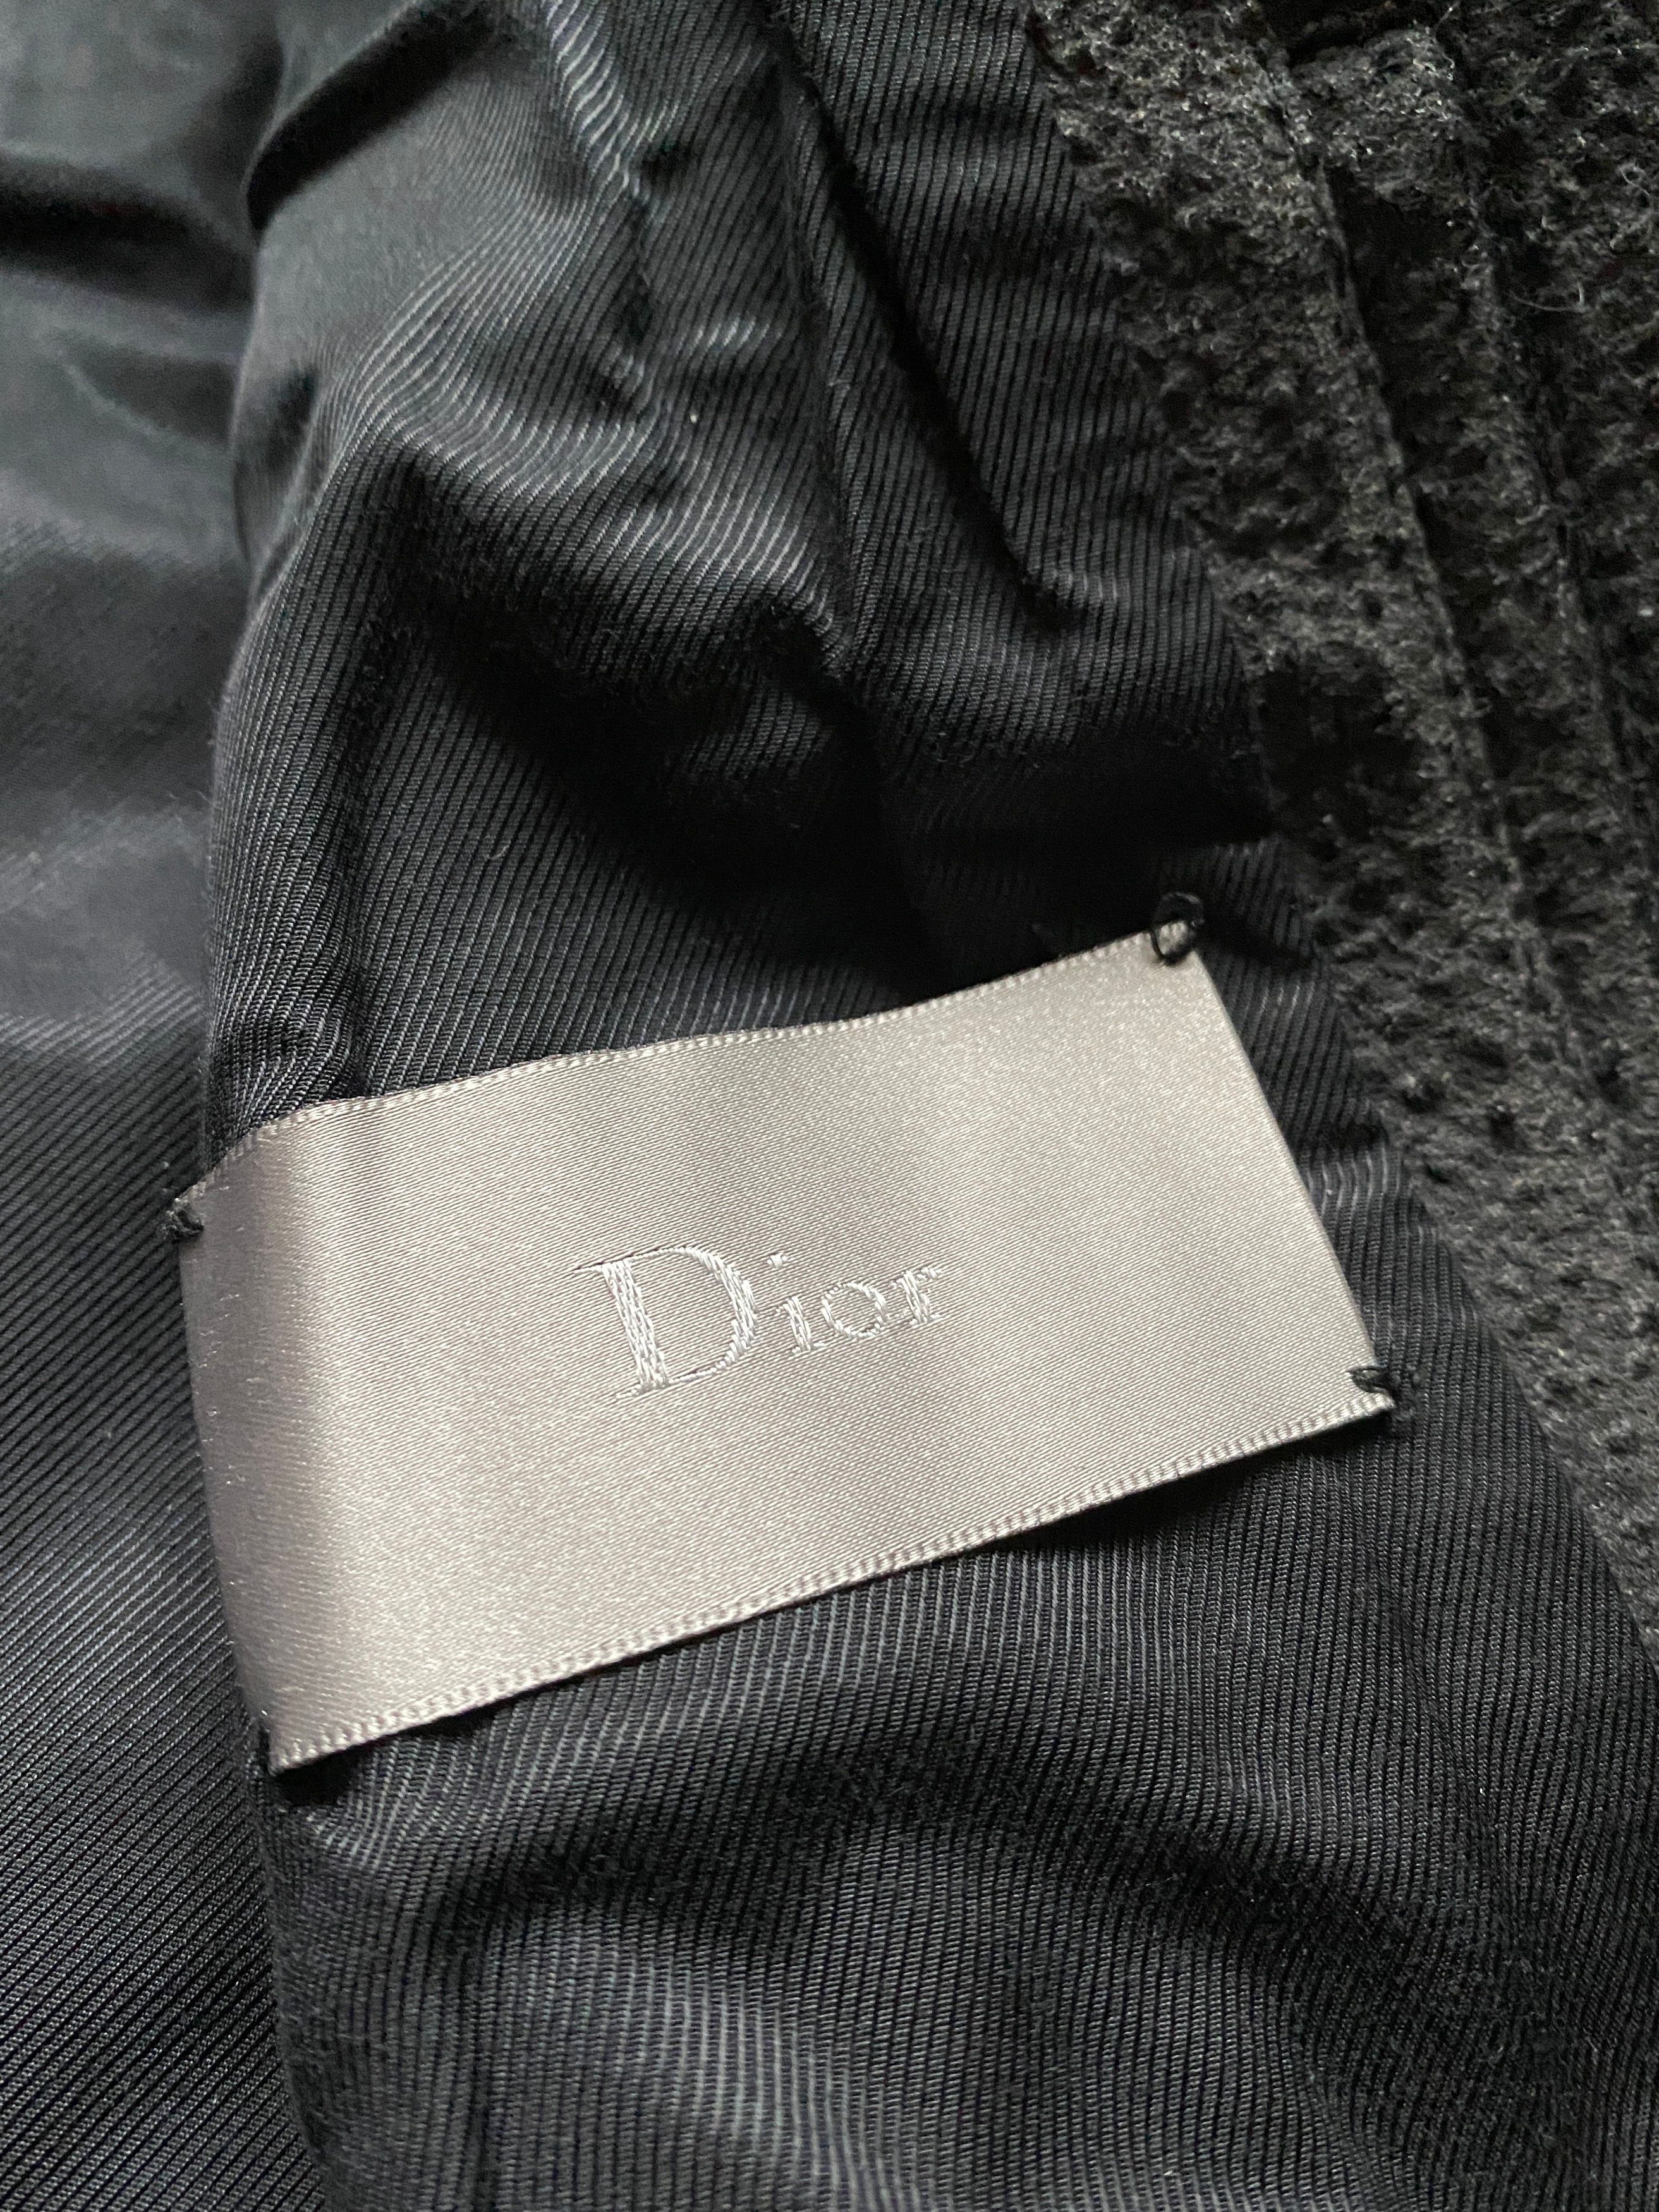 Dior ⚡️QUICK SALE⚡️Dior Dark Grey Black Duffle Coat Hedi Slimane Size US M / EU 48-50 / 2 - 4 Thumbnail